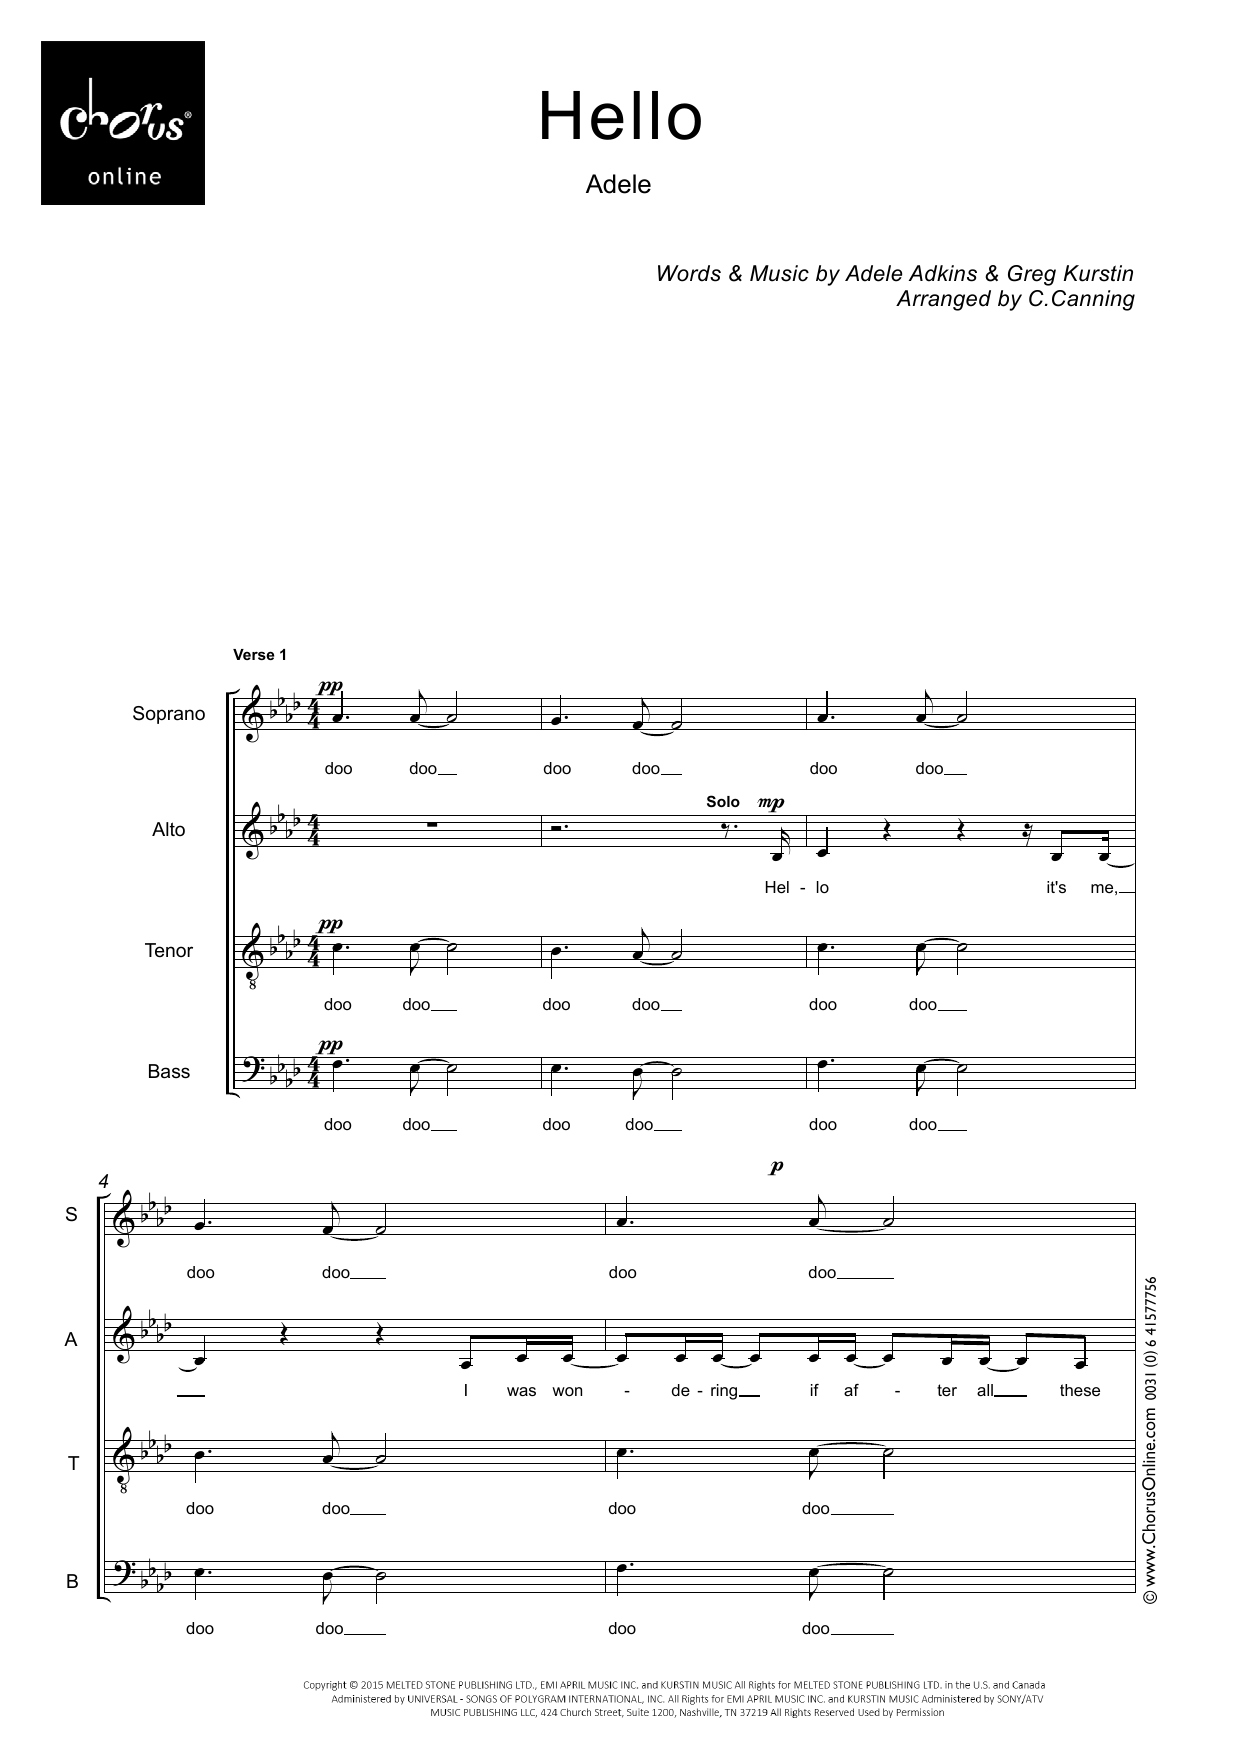 Adele Hello (arr. Carol Canning) sheet music notes printable PDF score